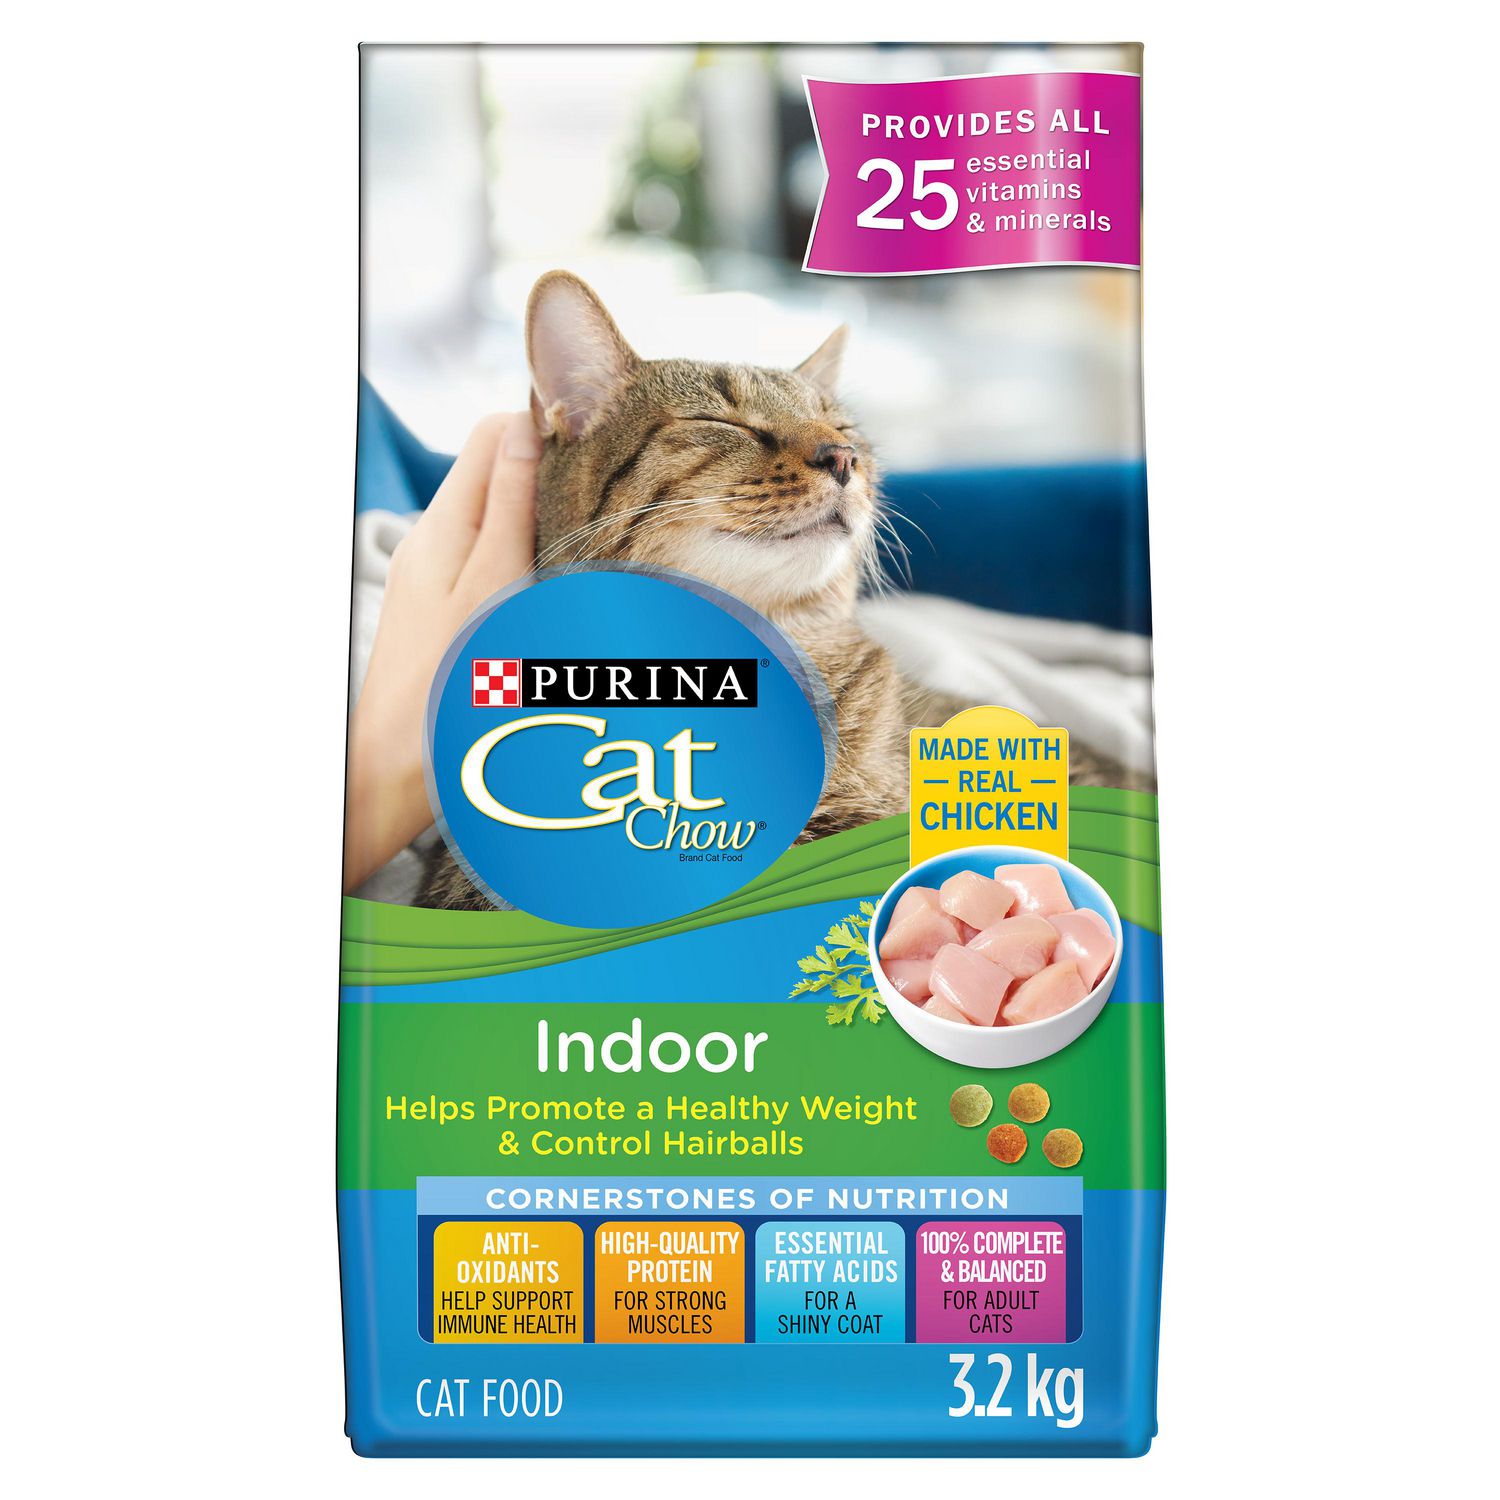 Cat Chow Indoor Dry Cat Food | Walmart Canada